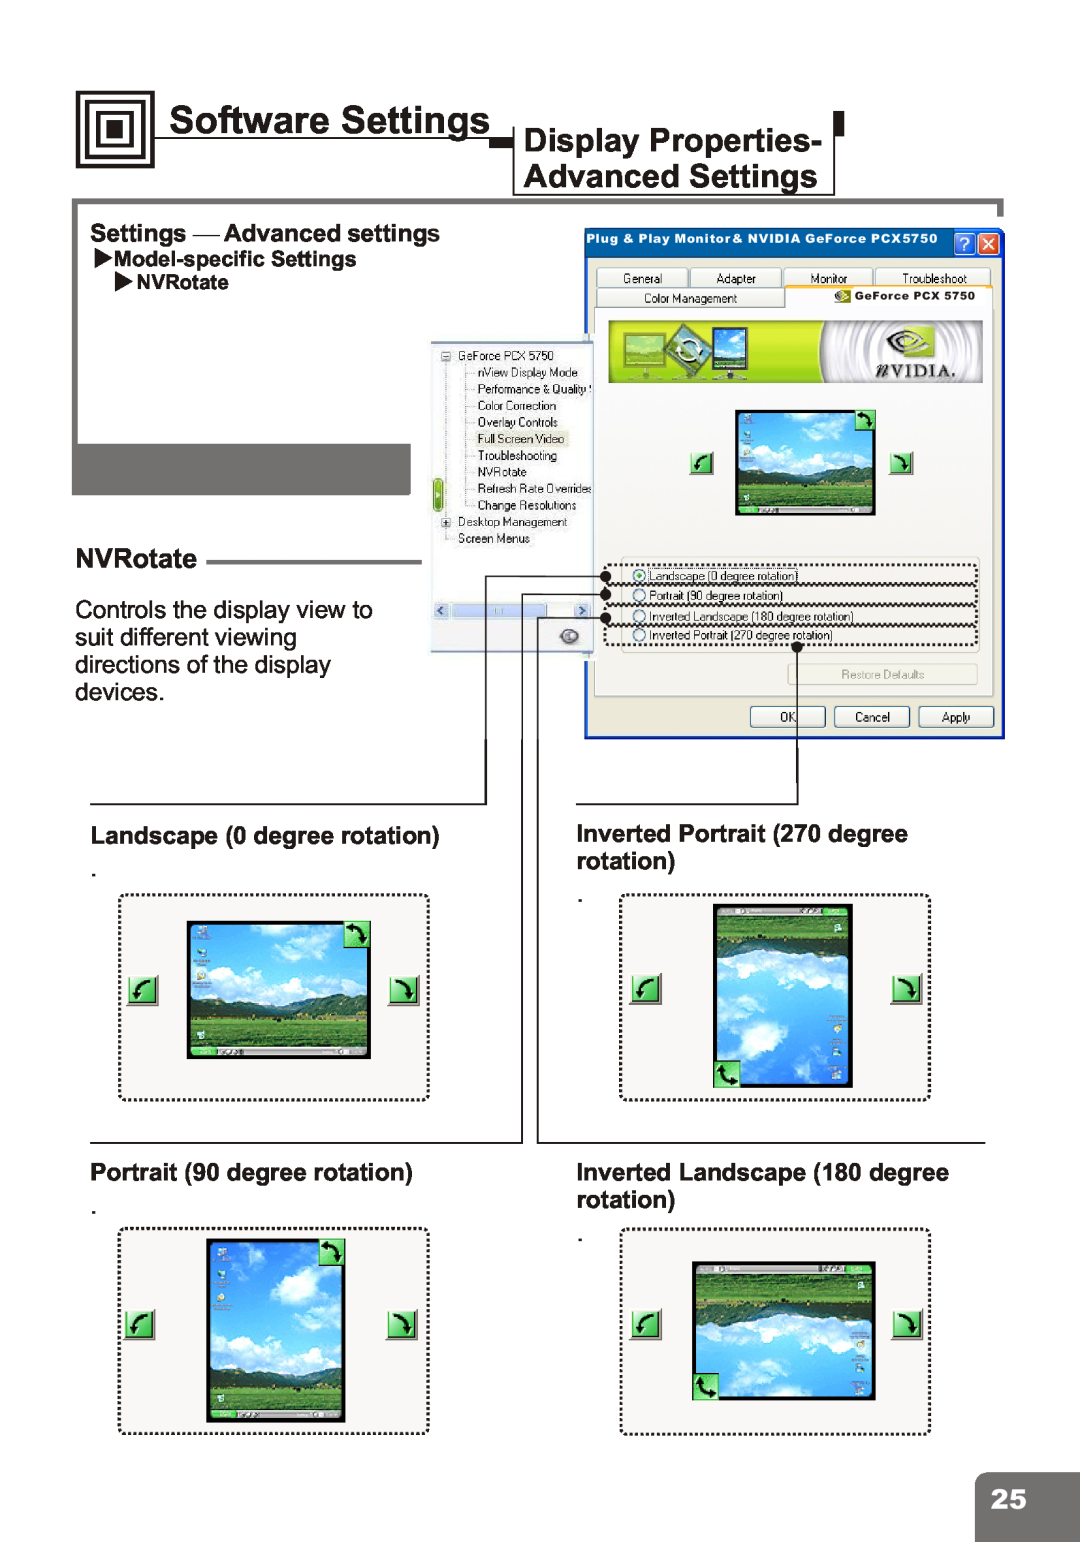 Nvidia PCI Express Series NVRotate, Landscape 0 degree rotation, Inverted Portrait 270 degree, Portrait 90 degree rotation 